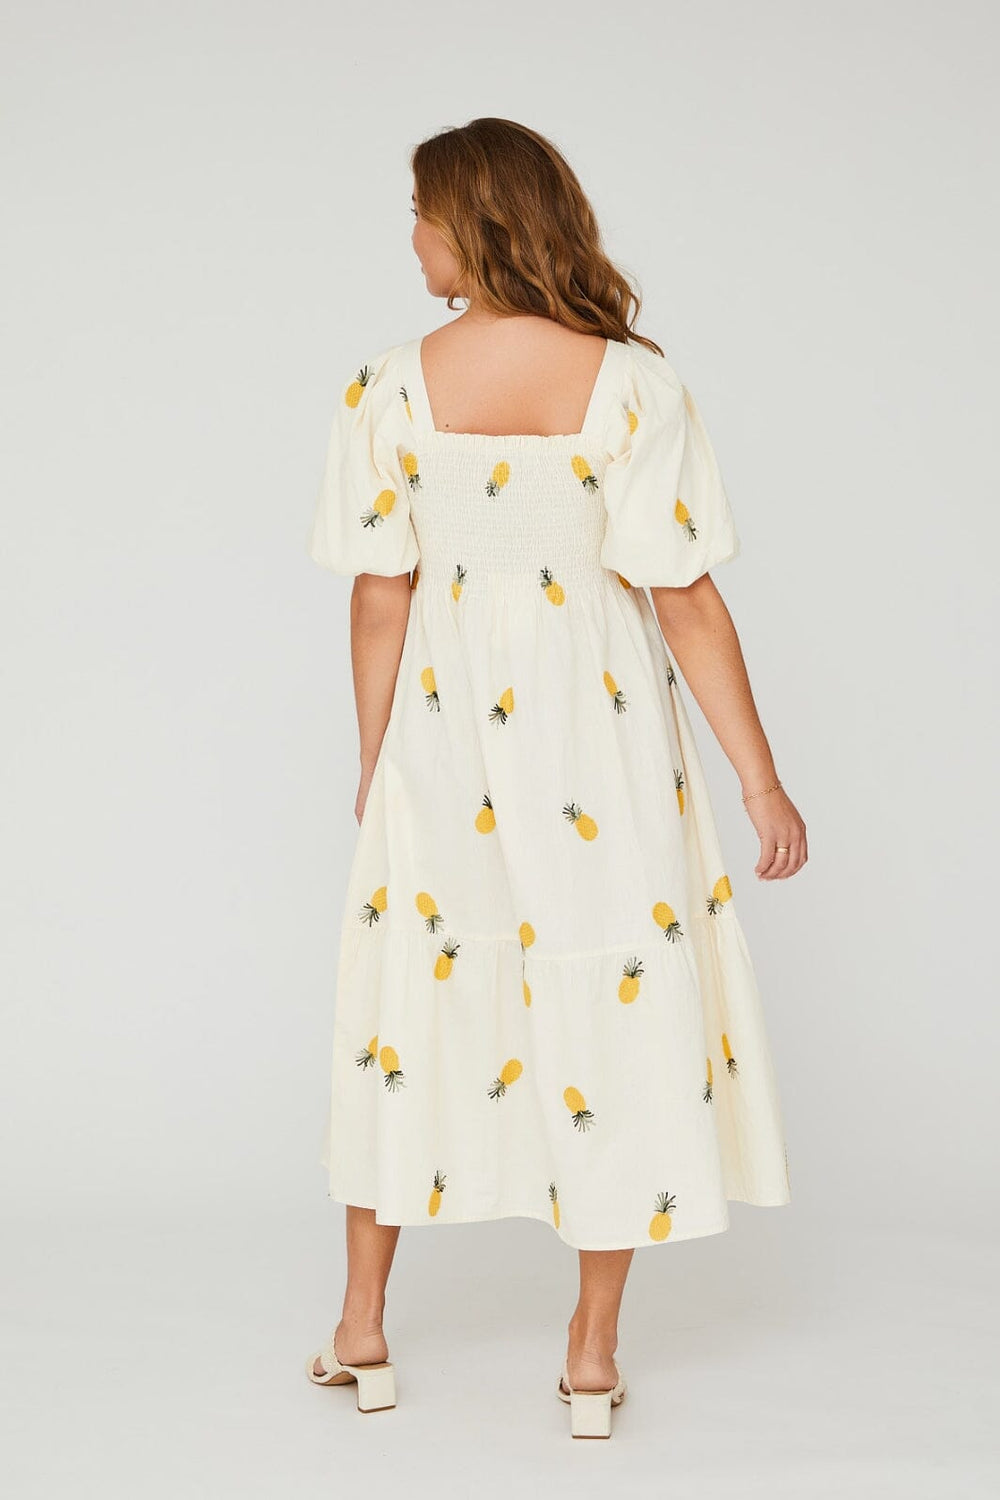 A-View - Cheri Fruit Dress - 201 Sand/Yellow Kjoler 